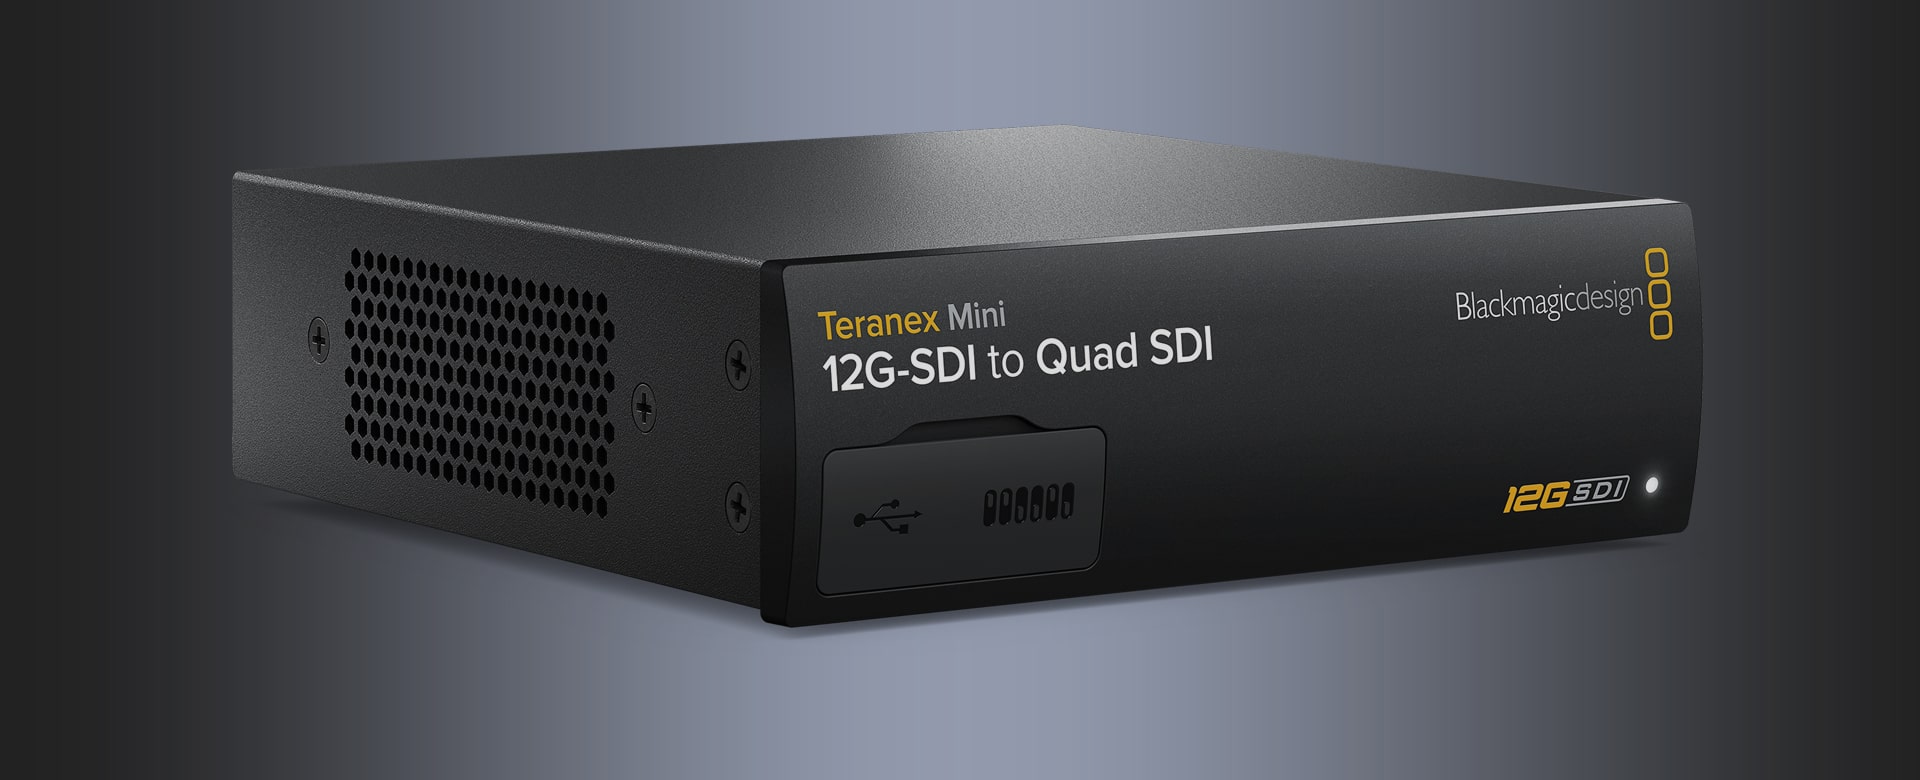 Teranex Mini 12G-SDI to Quad SDI